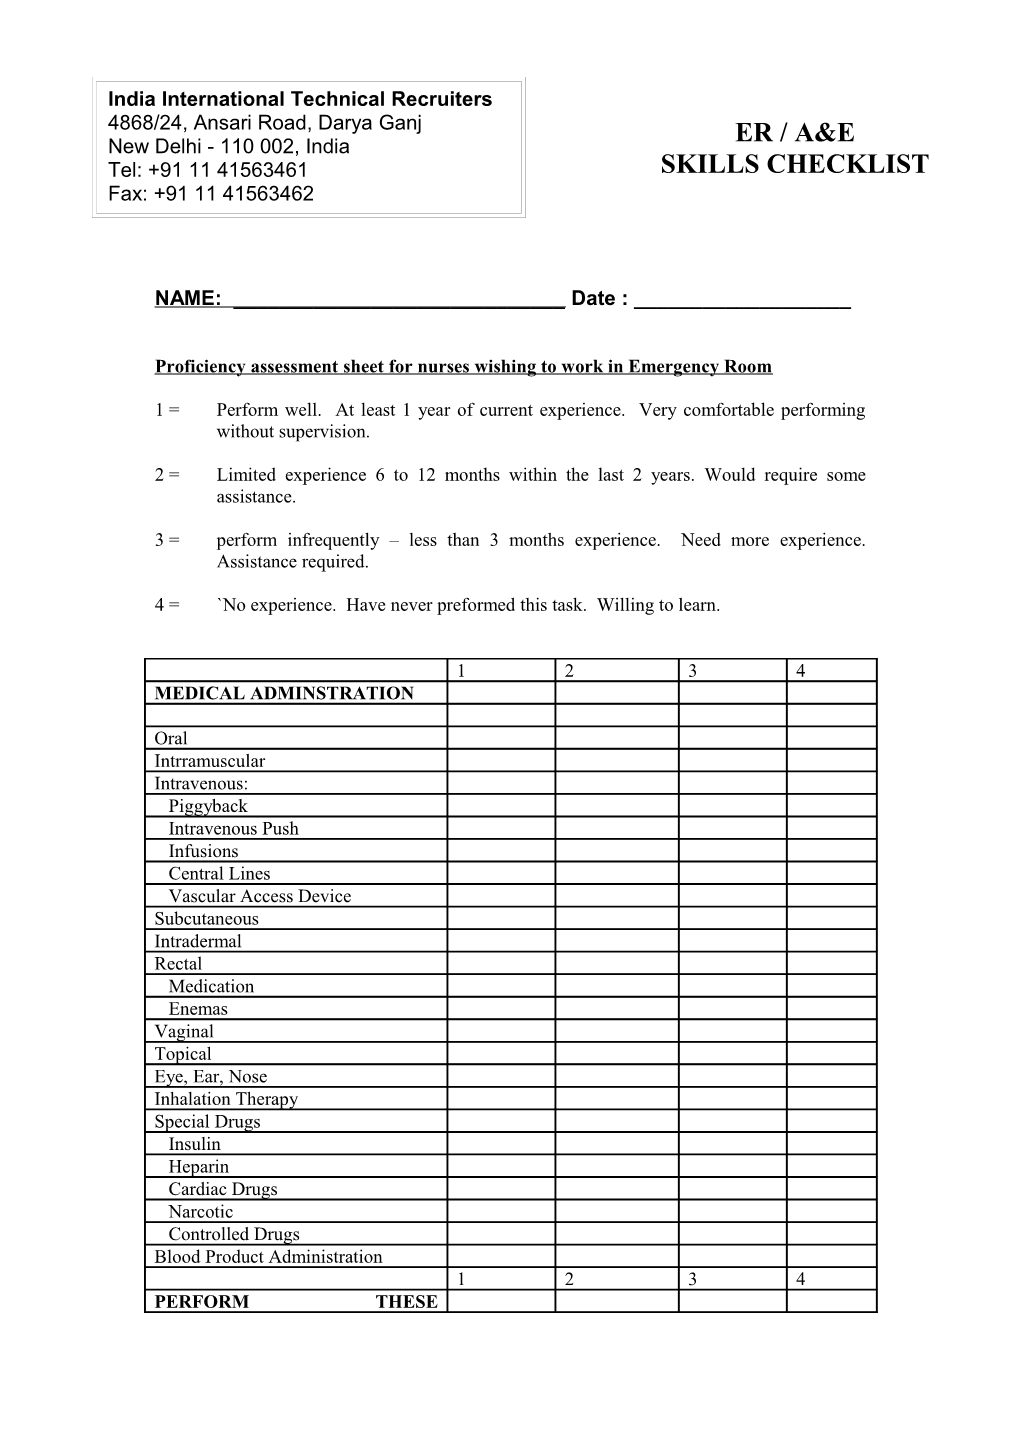 Proficiency Assessment Sheet for Nurses Wishing to Work in Emergency Room